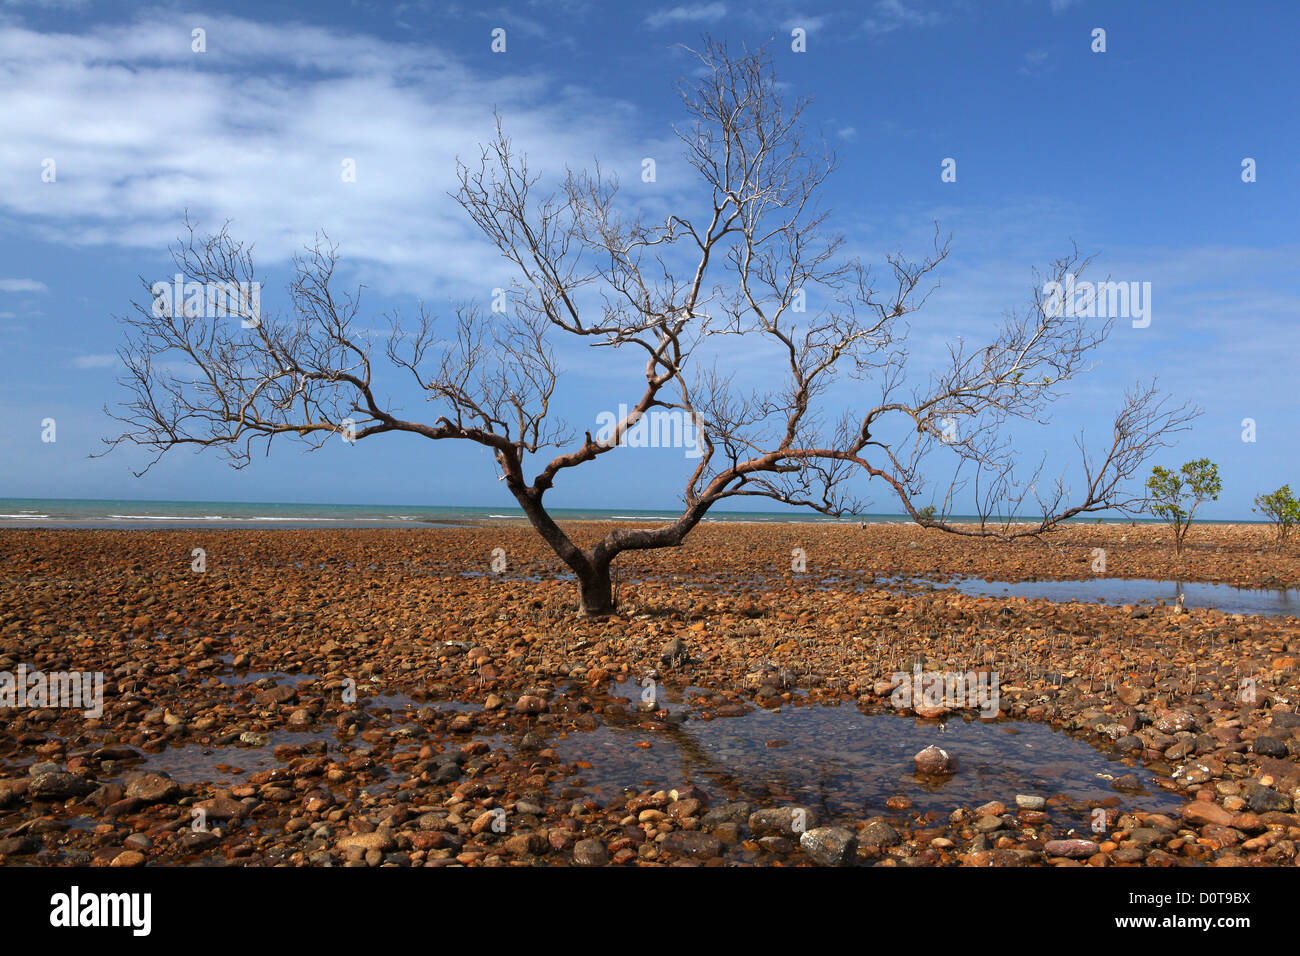 Mangrove, low, ebb, tide, tree, salted water, aerial root, conformist, sea, pebble stones, Rollingstone, Queensland, Australia, Stock Photo